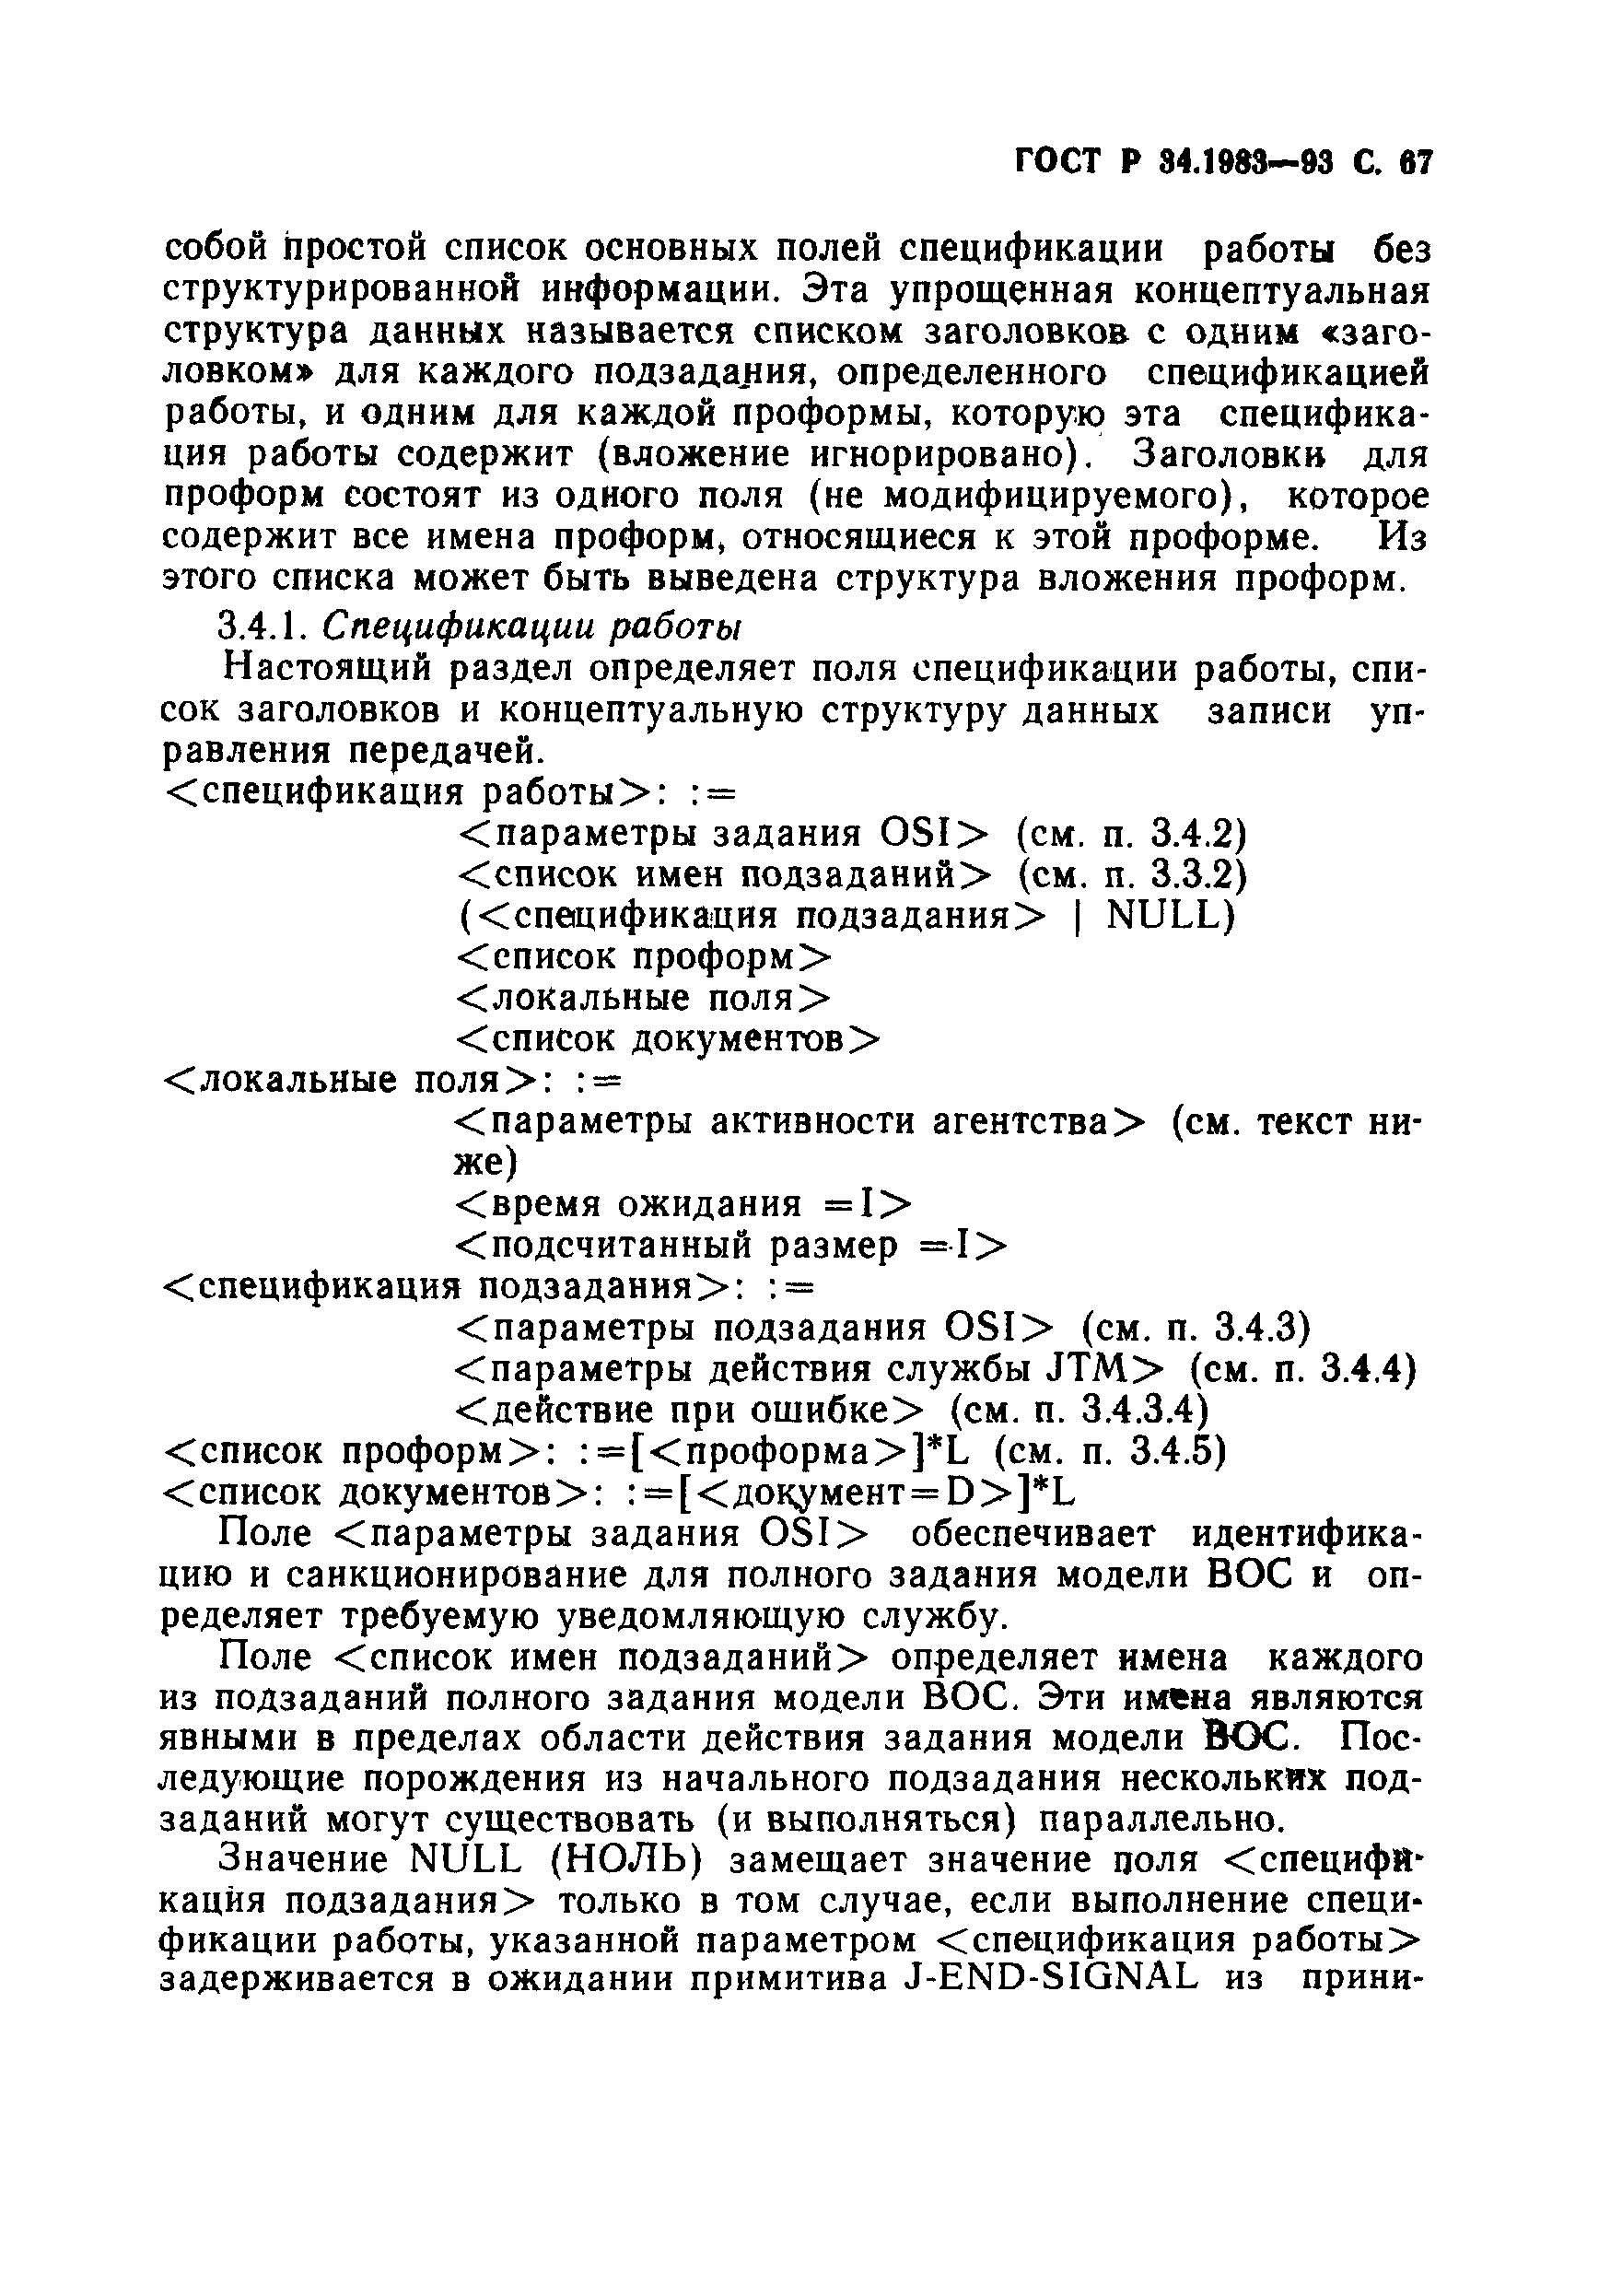 ГОСТ Р 34.1983-93. Страница 68